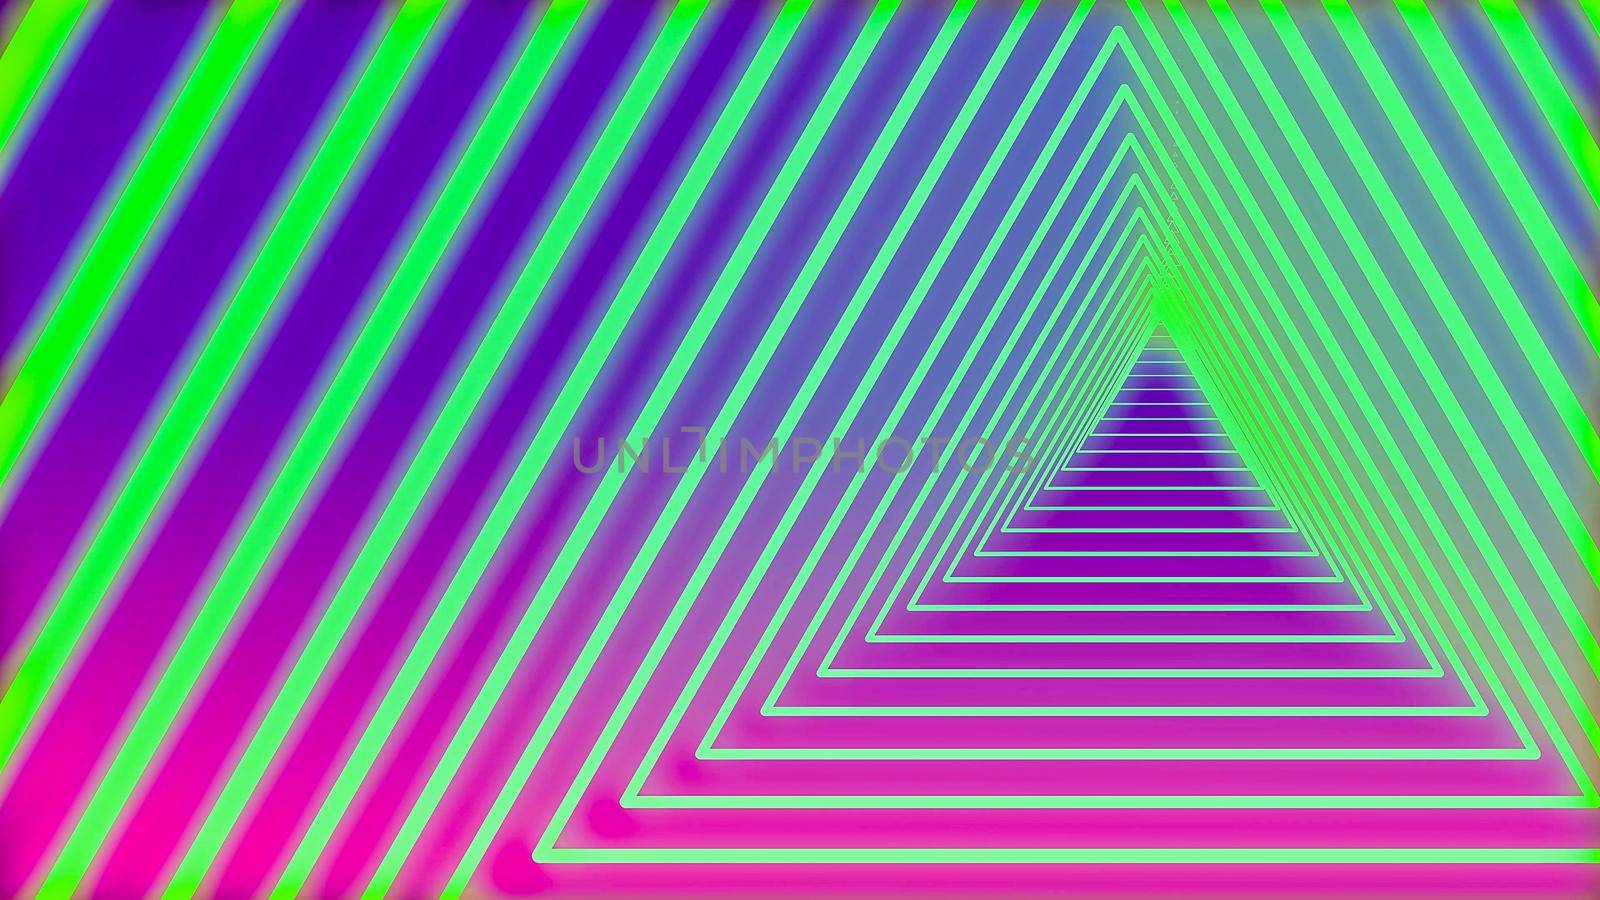 Retro triangular tunnel of triangles by imagesbykenny